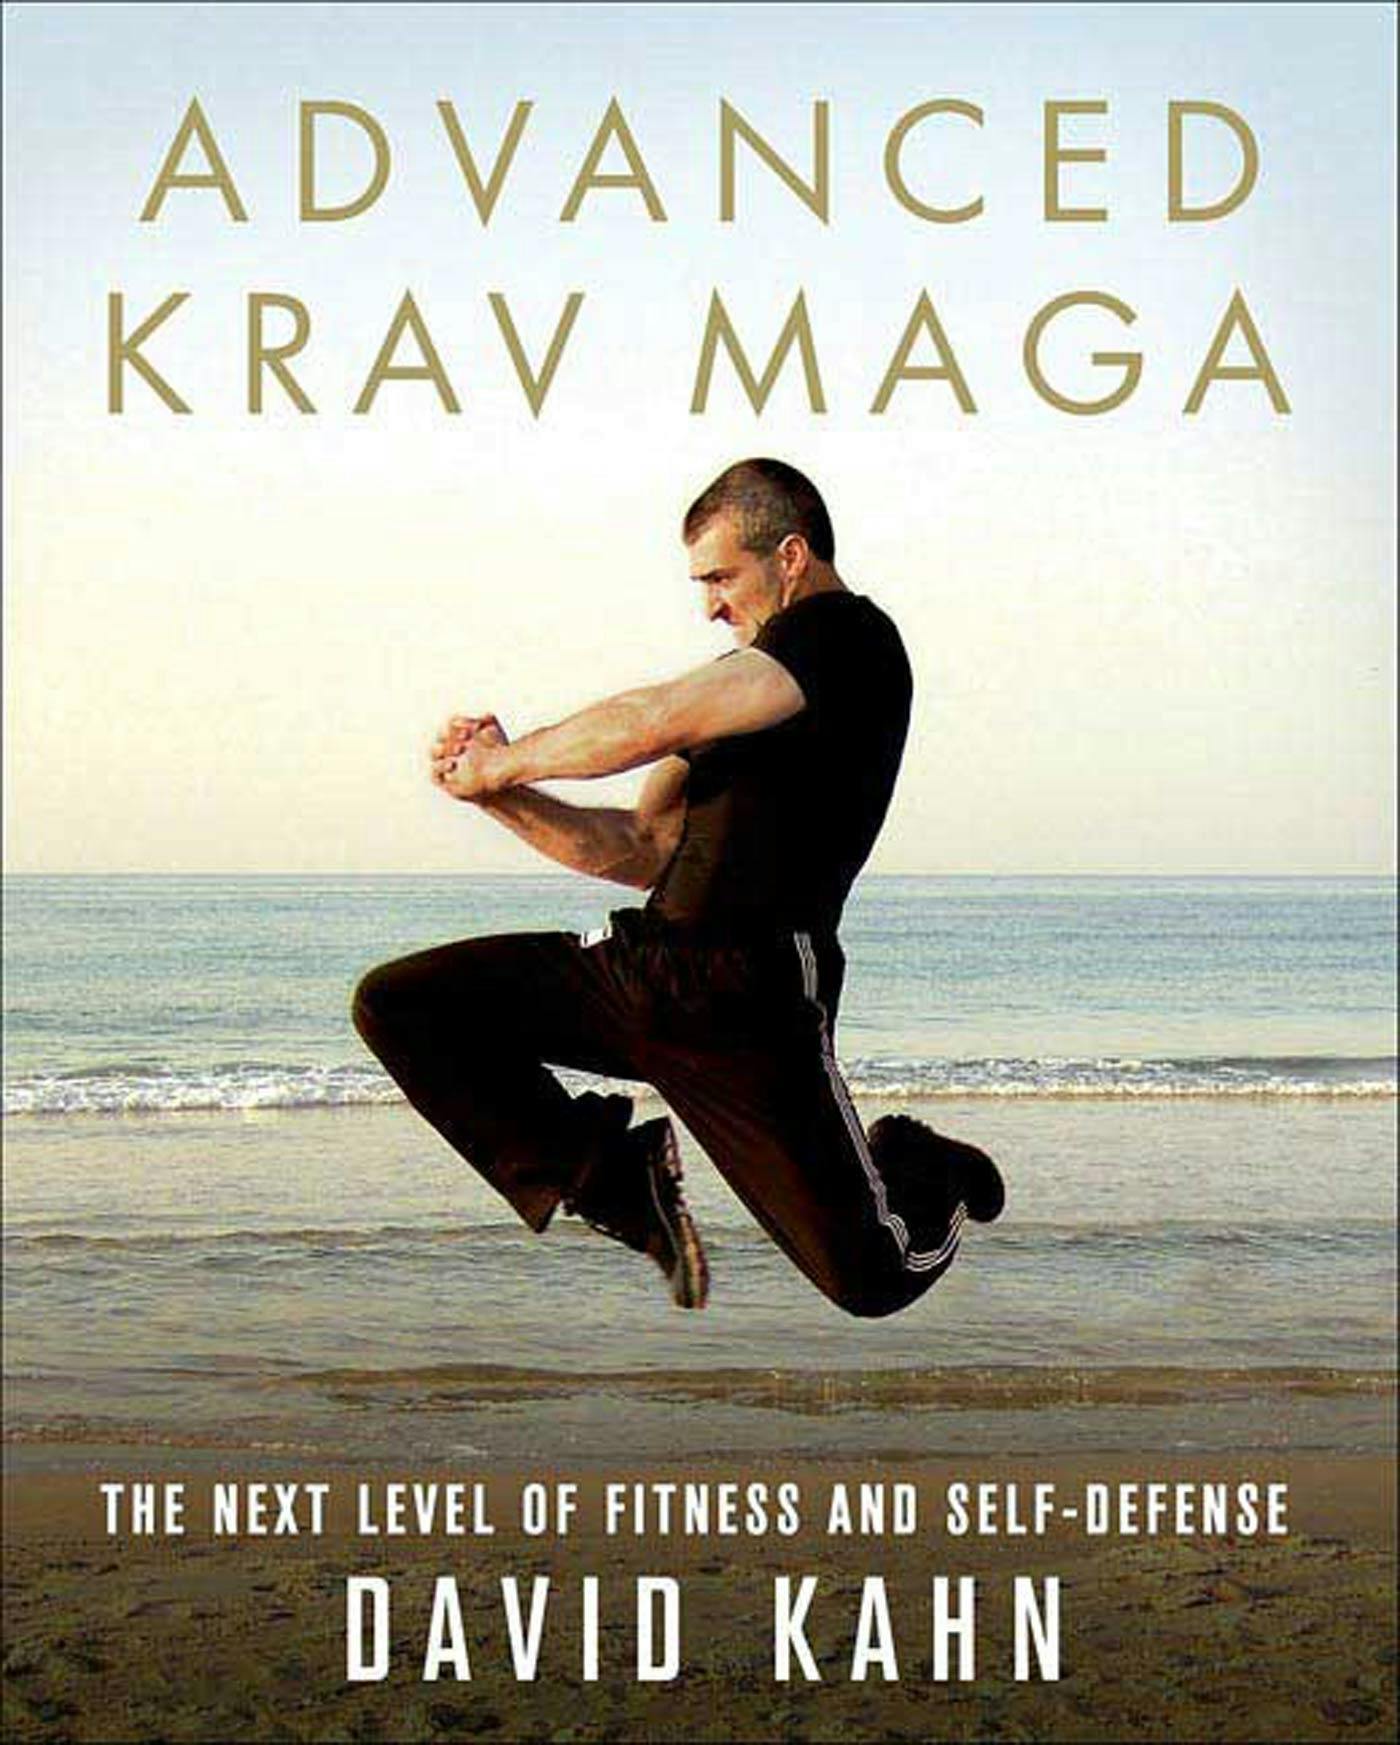 Active Krav Maga - New York Self Defense Academy